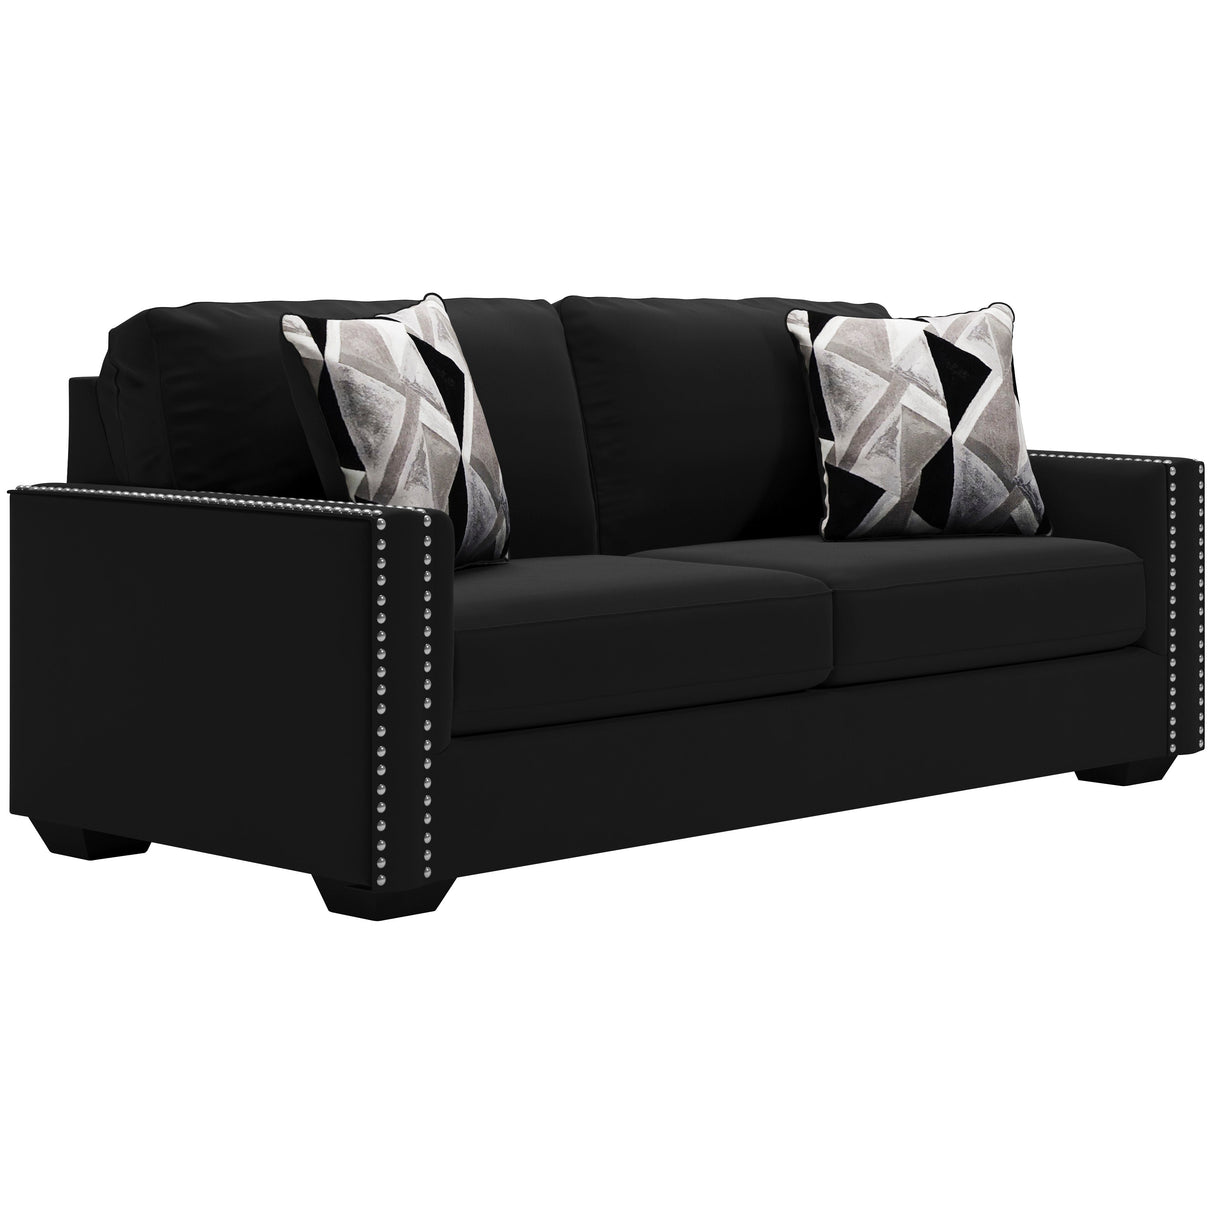 Gleston Contemporary Sofa in Onyx by Ashley Furniture Ashley Furniture